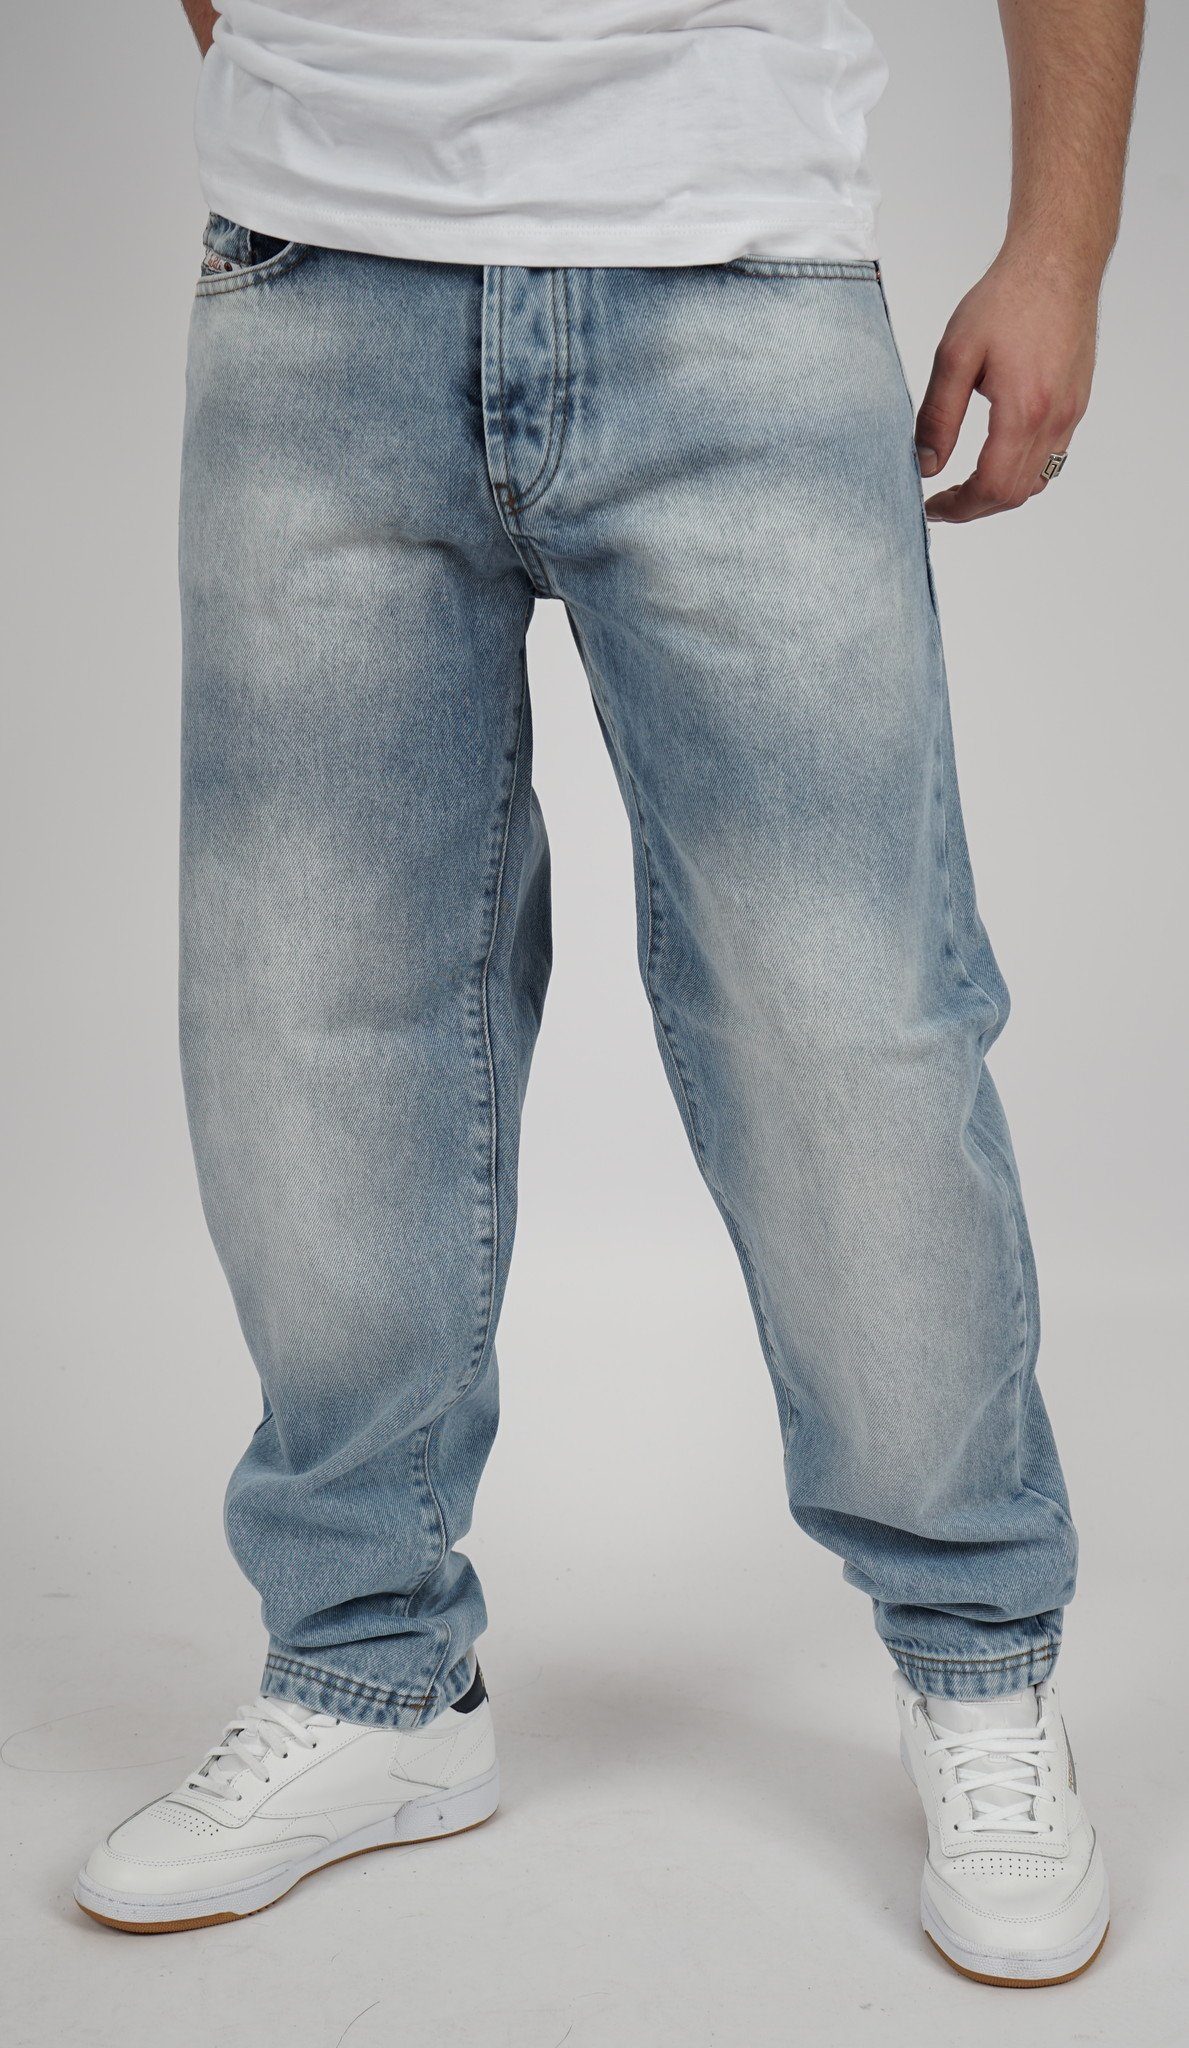 Picaldi Zicco 472 VIRGINIA Jeans 